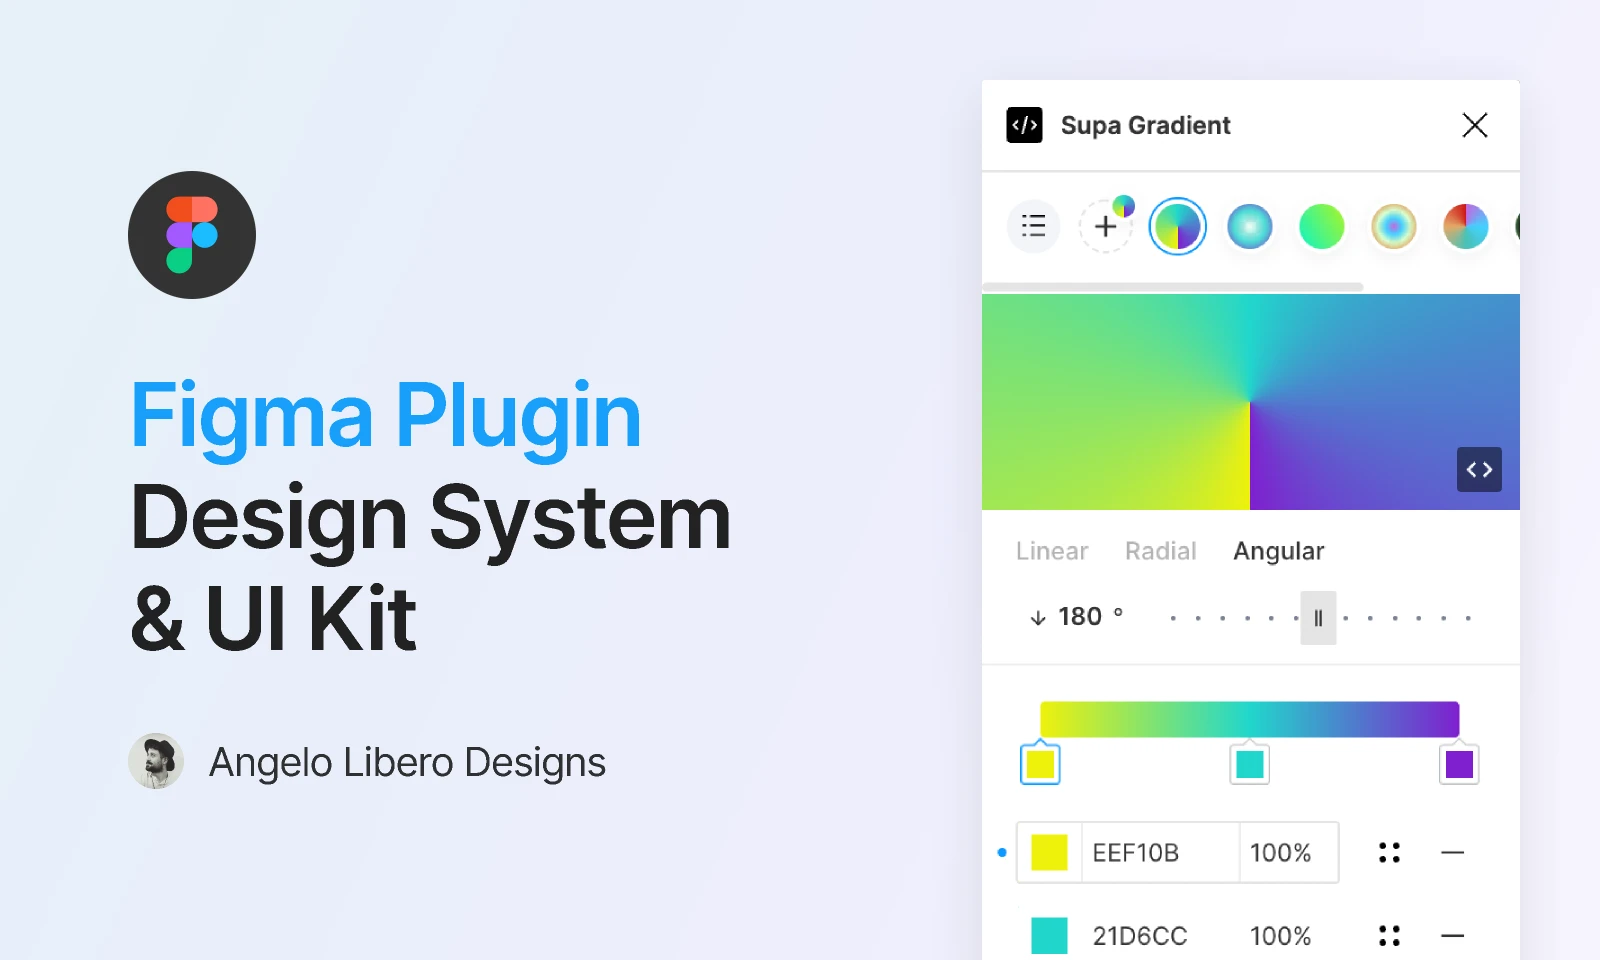  Figma plugin - Design System & UI Kit for Figma and Adobe XD